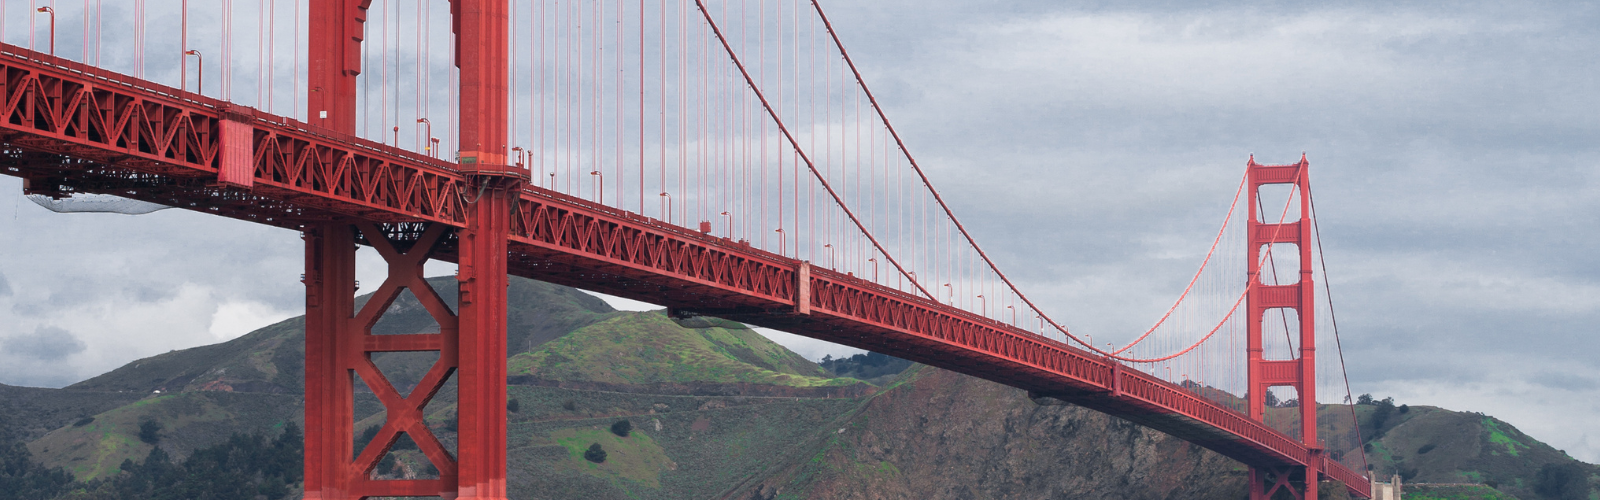 San Francisco Bridge photo